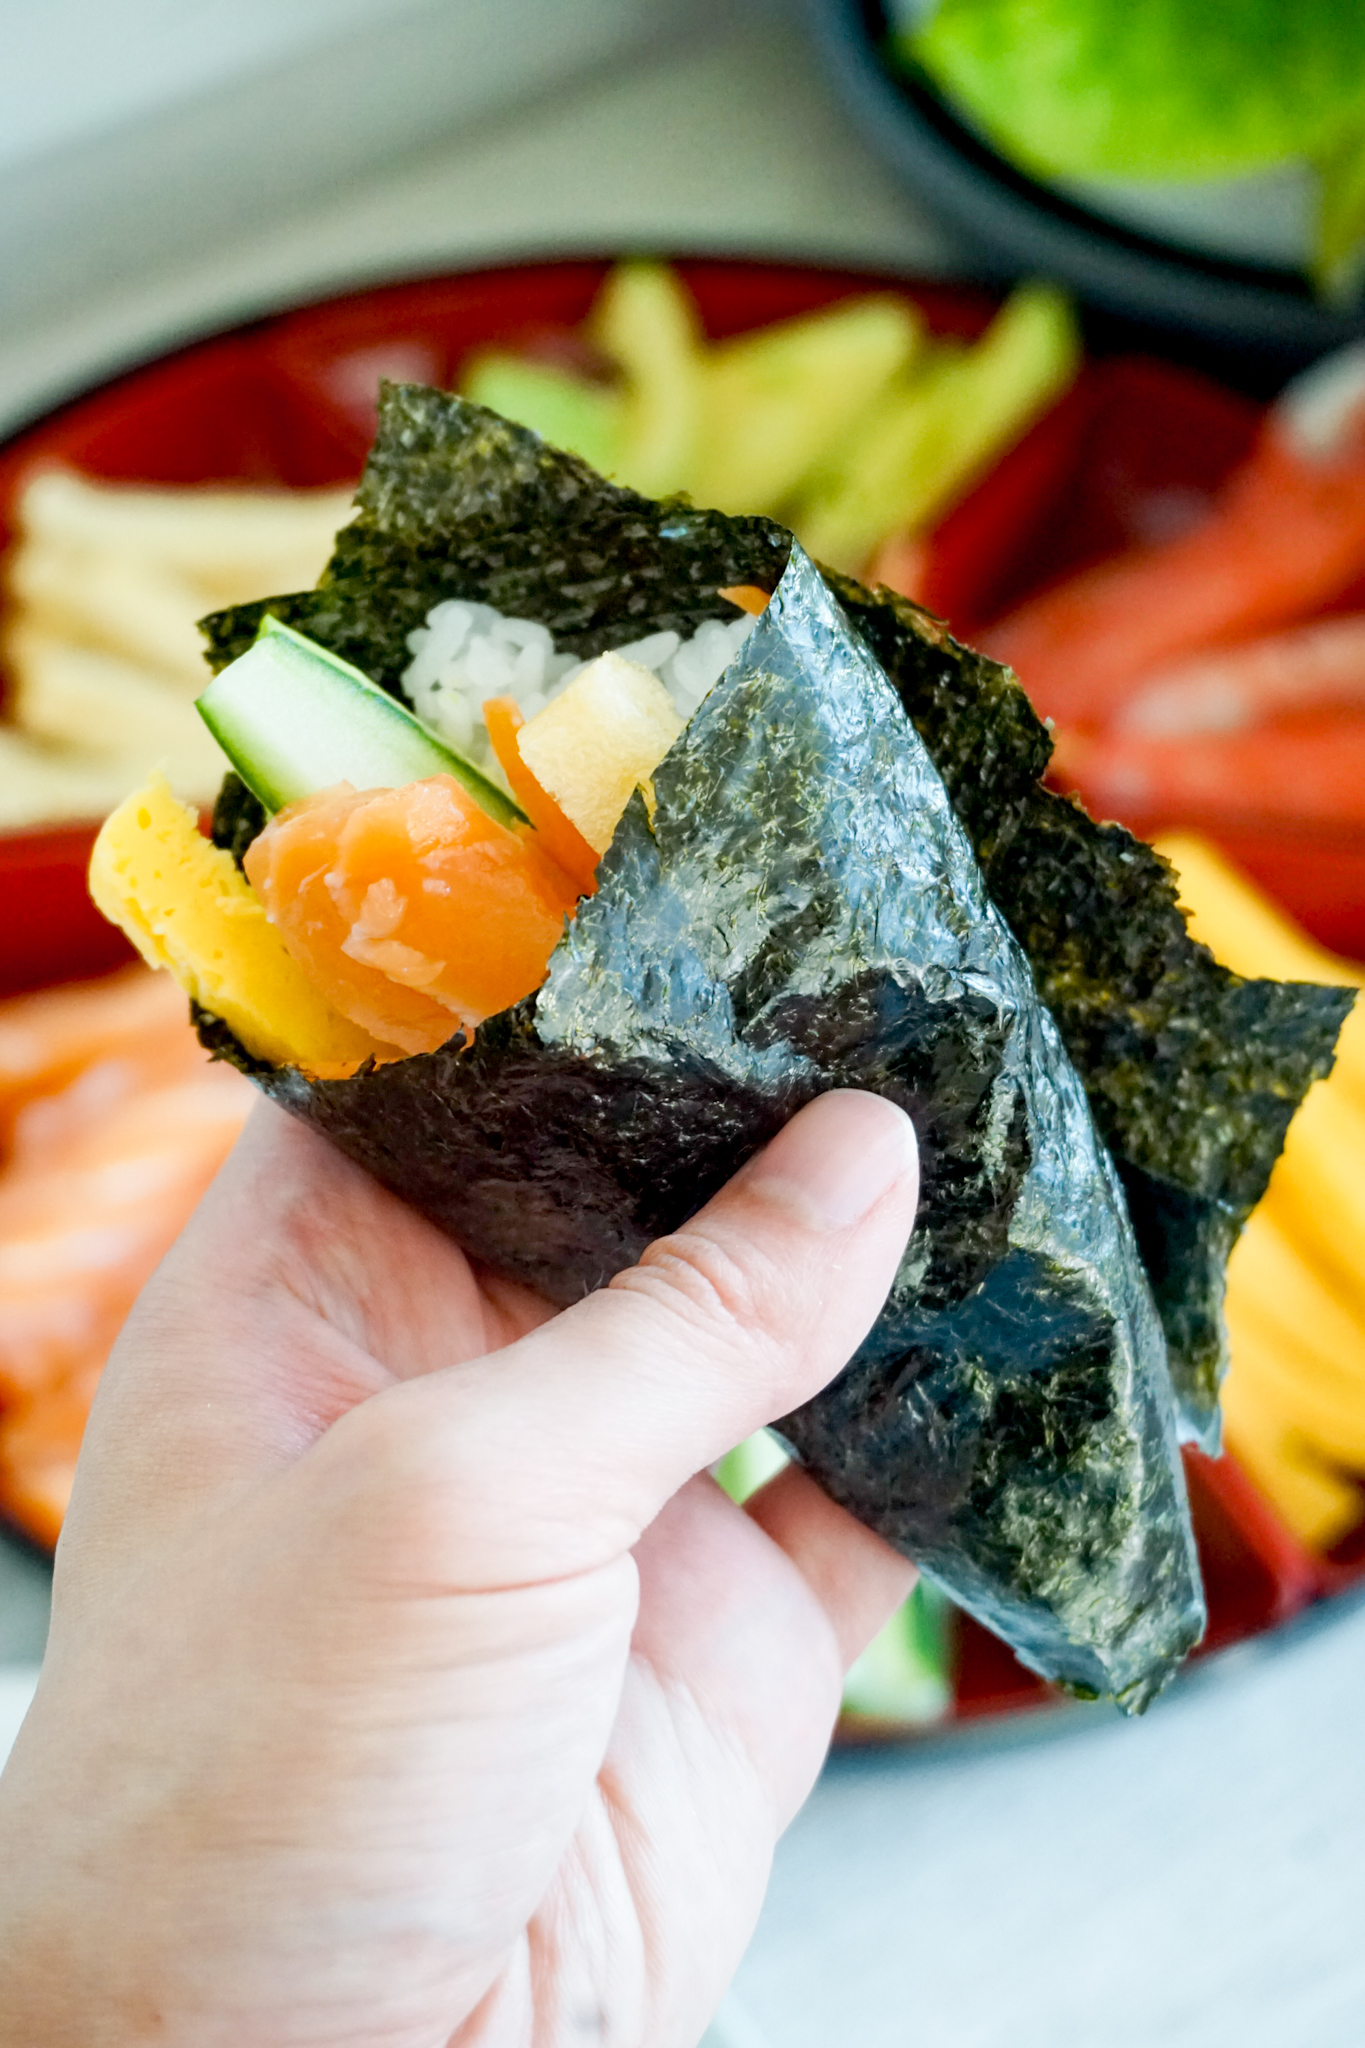 Daiso's super-easy, super-cheap sushi maker lets you make sushi